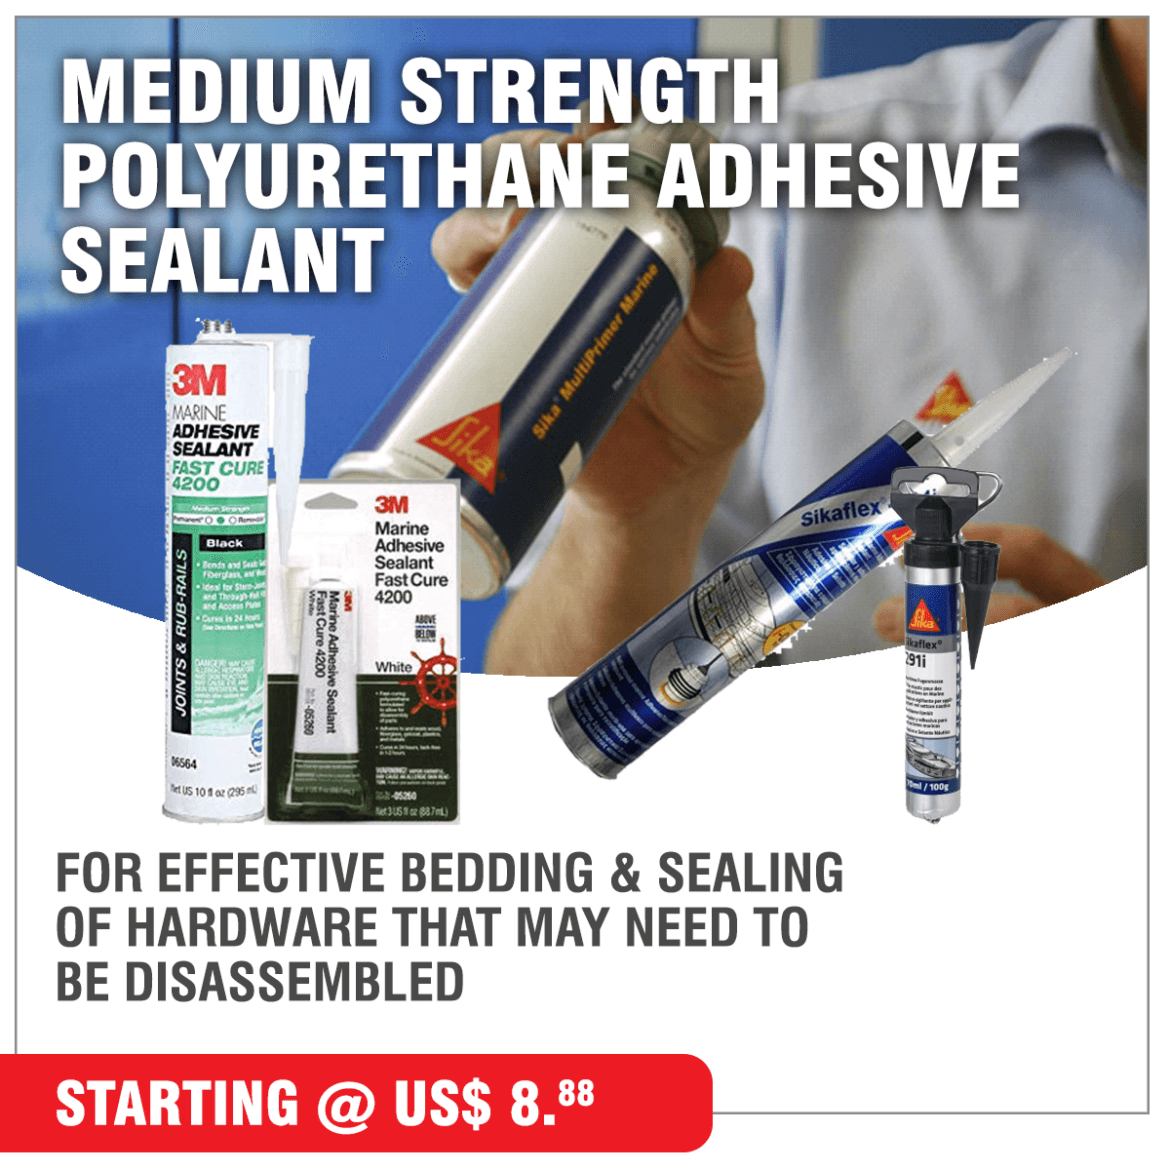 3M 4200 Adhesive/Sealant - The Rigging Company